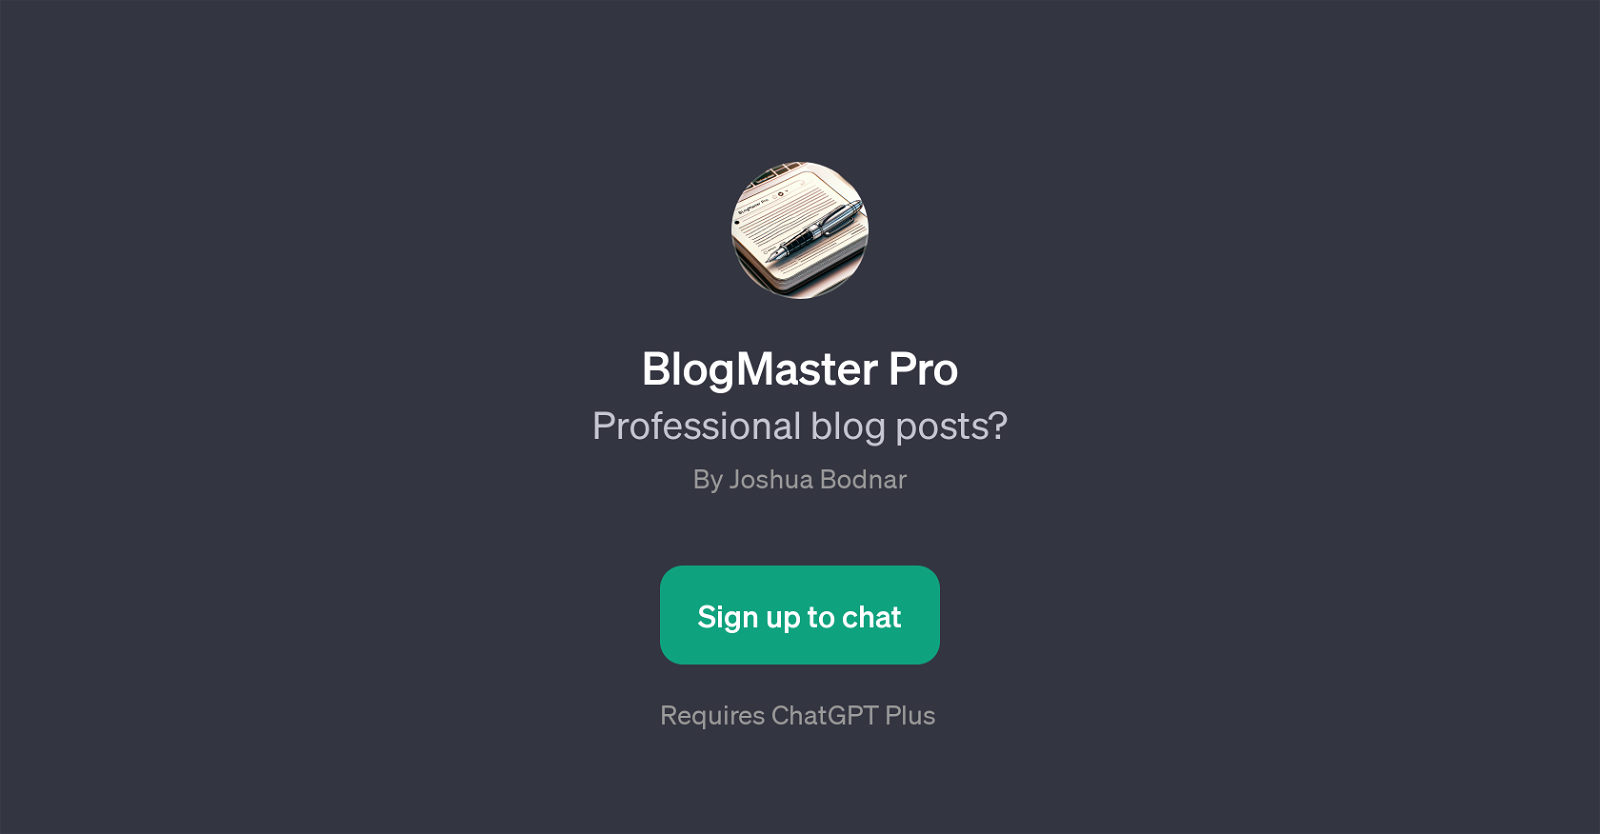 BlogMaster Pro website